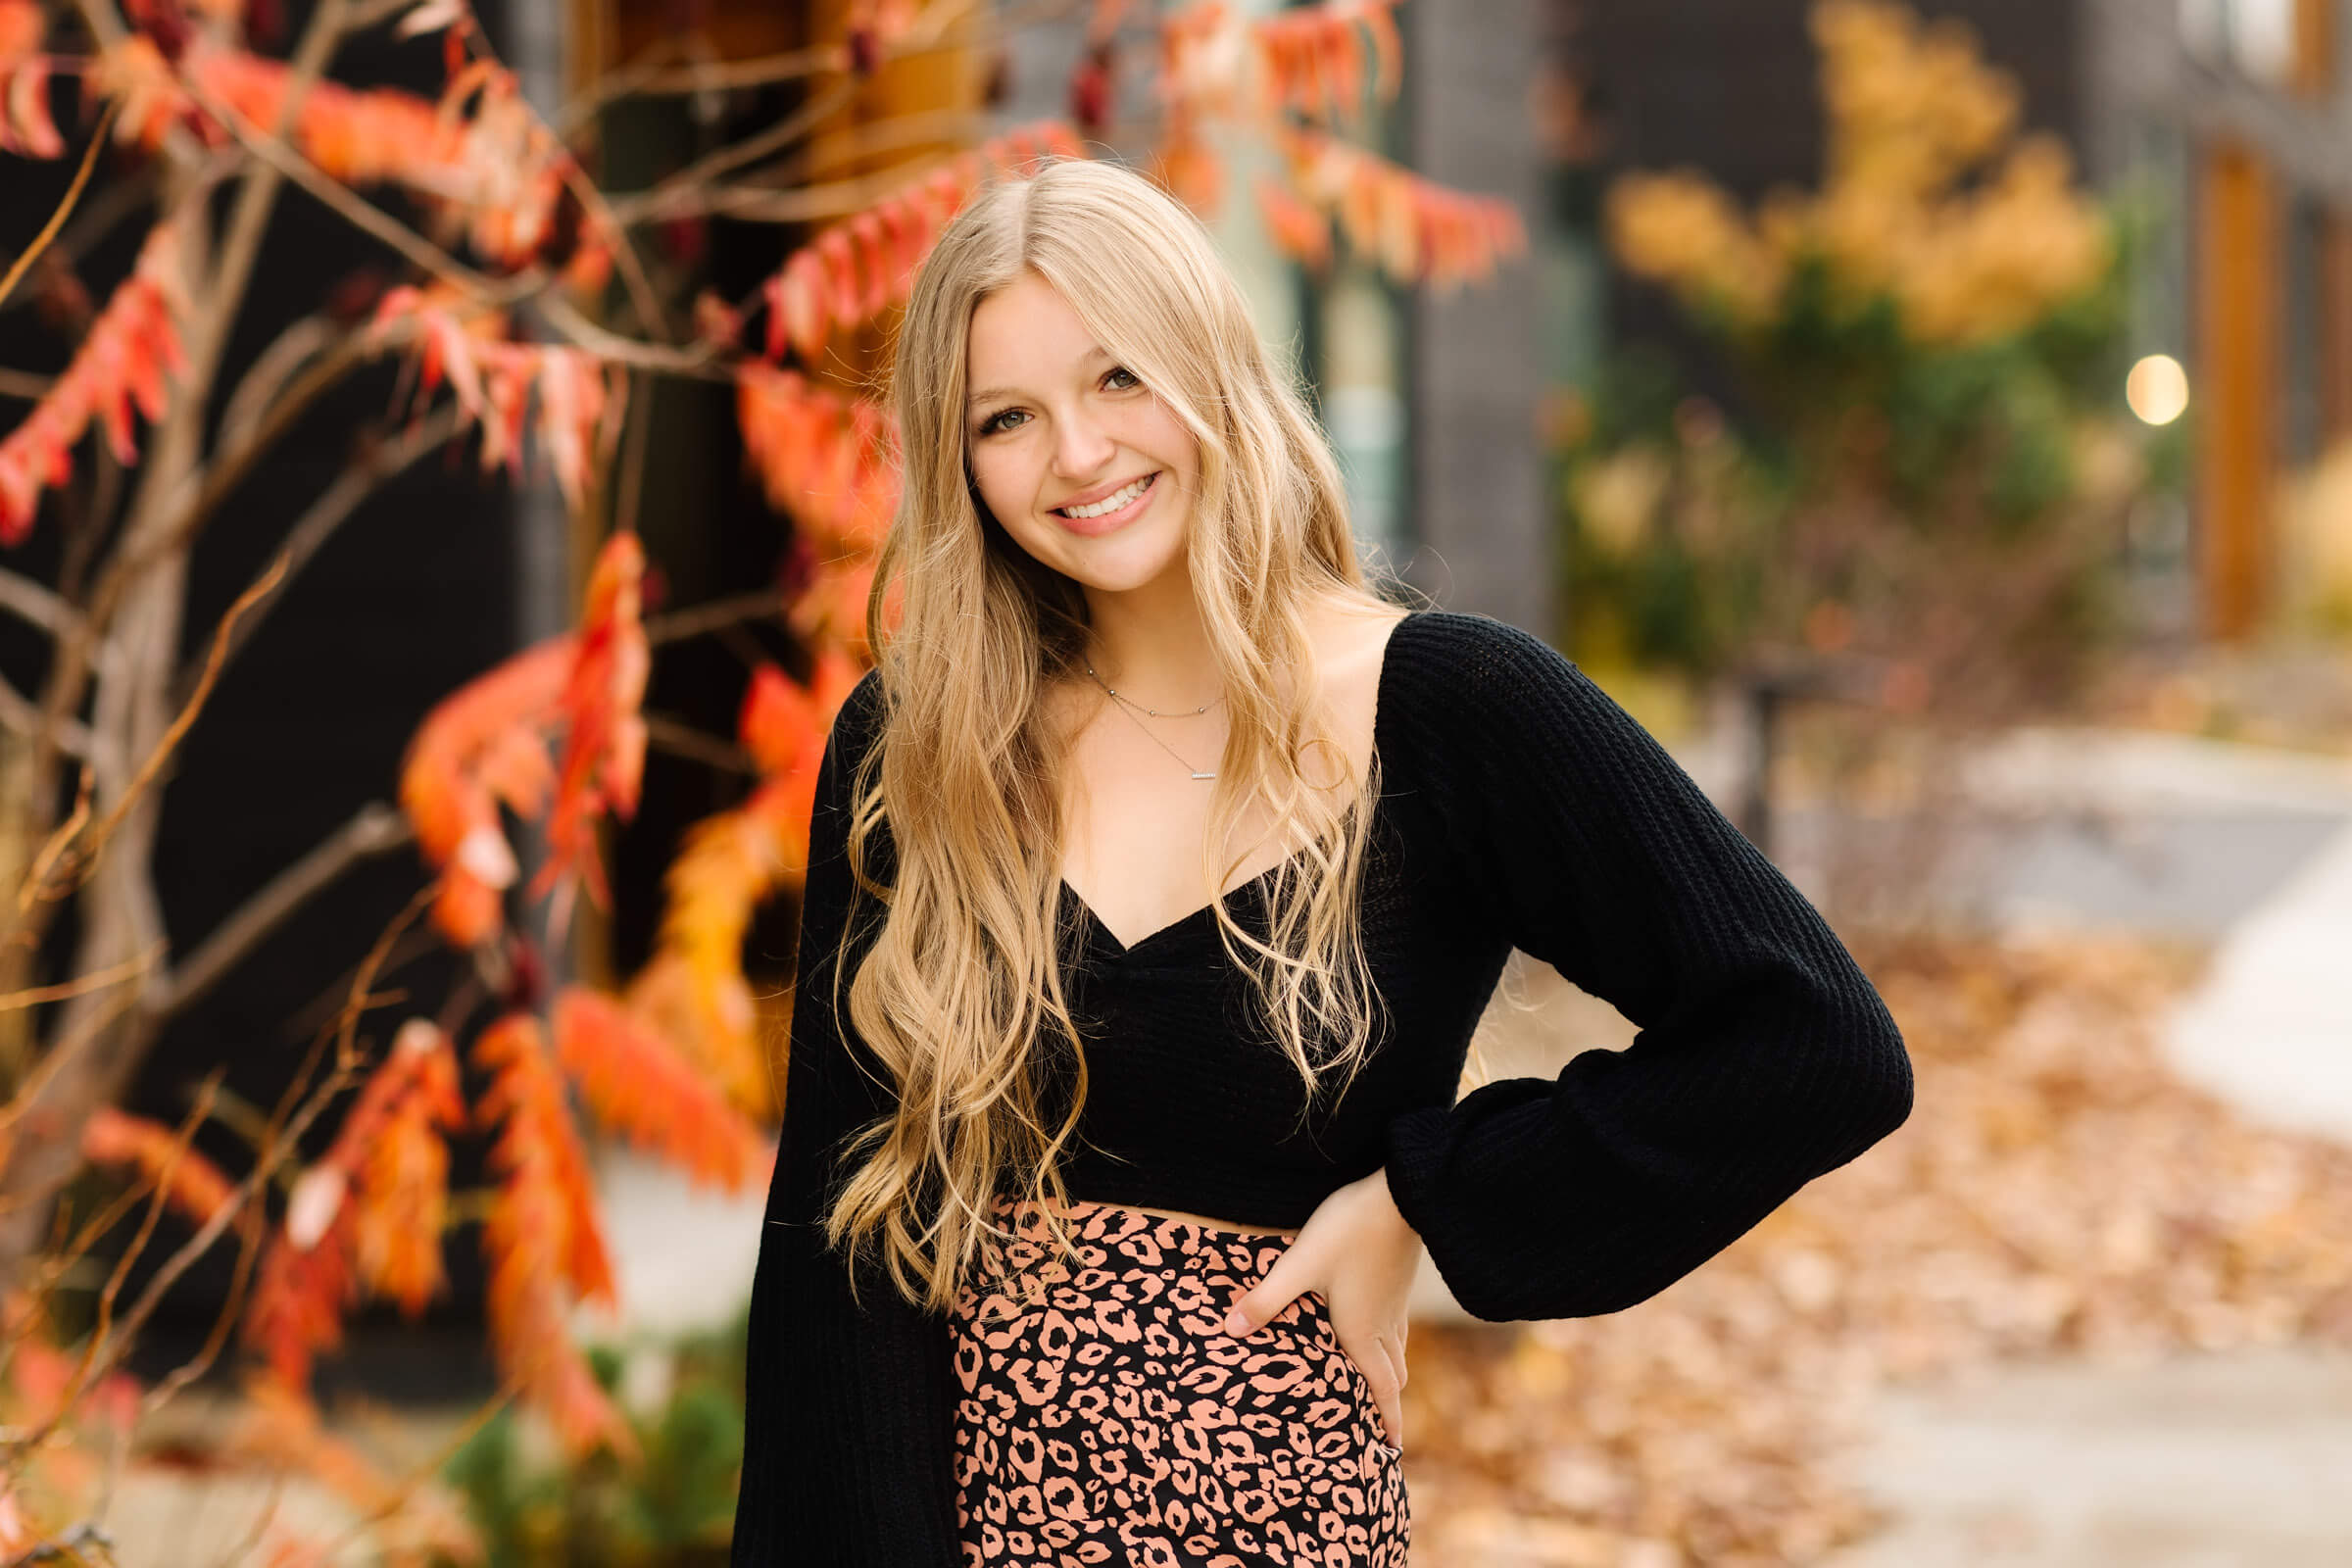 blonde senior girl in black top standing in front of orange trees in bend